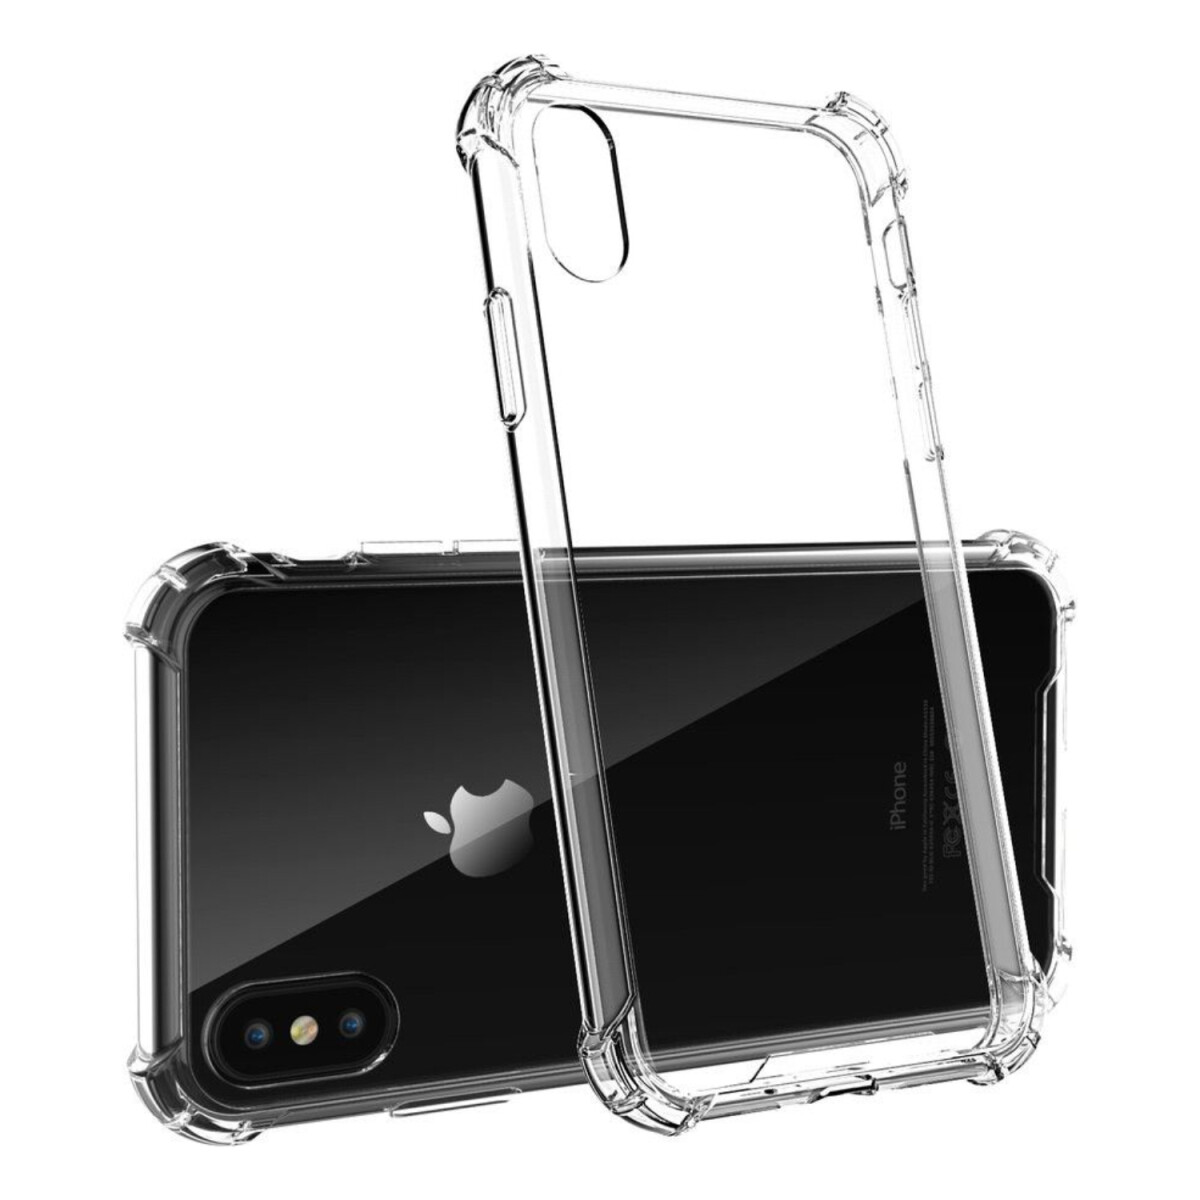 Carcasa Celular Funda Protector Case Tpu Transparente iPhone X/XS 